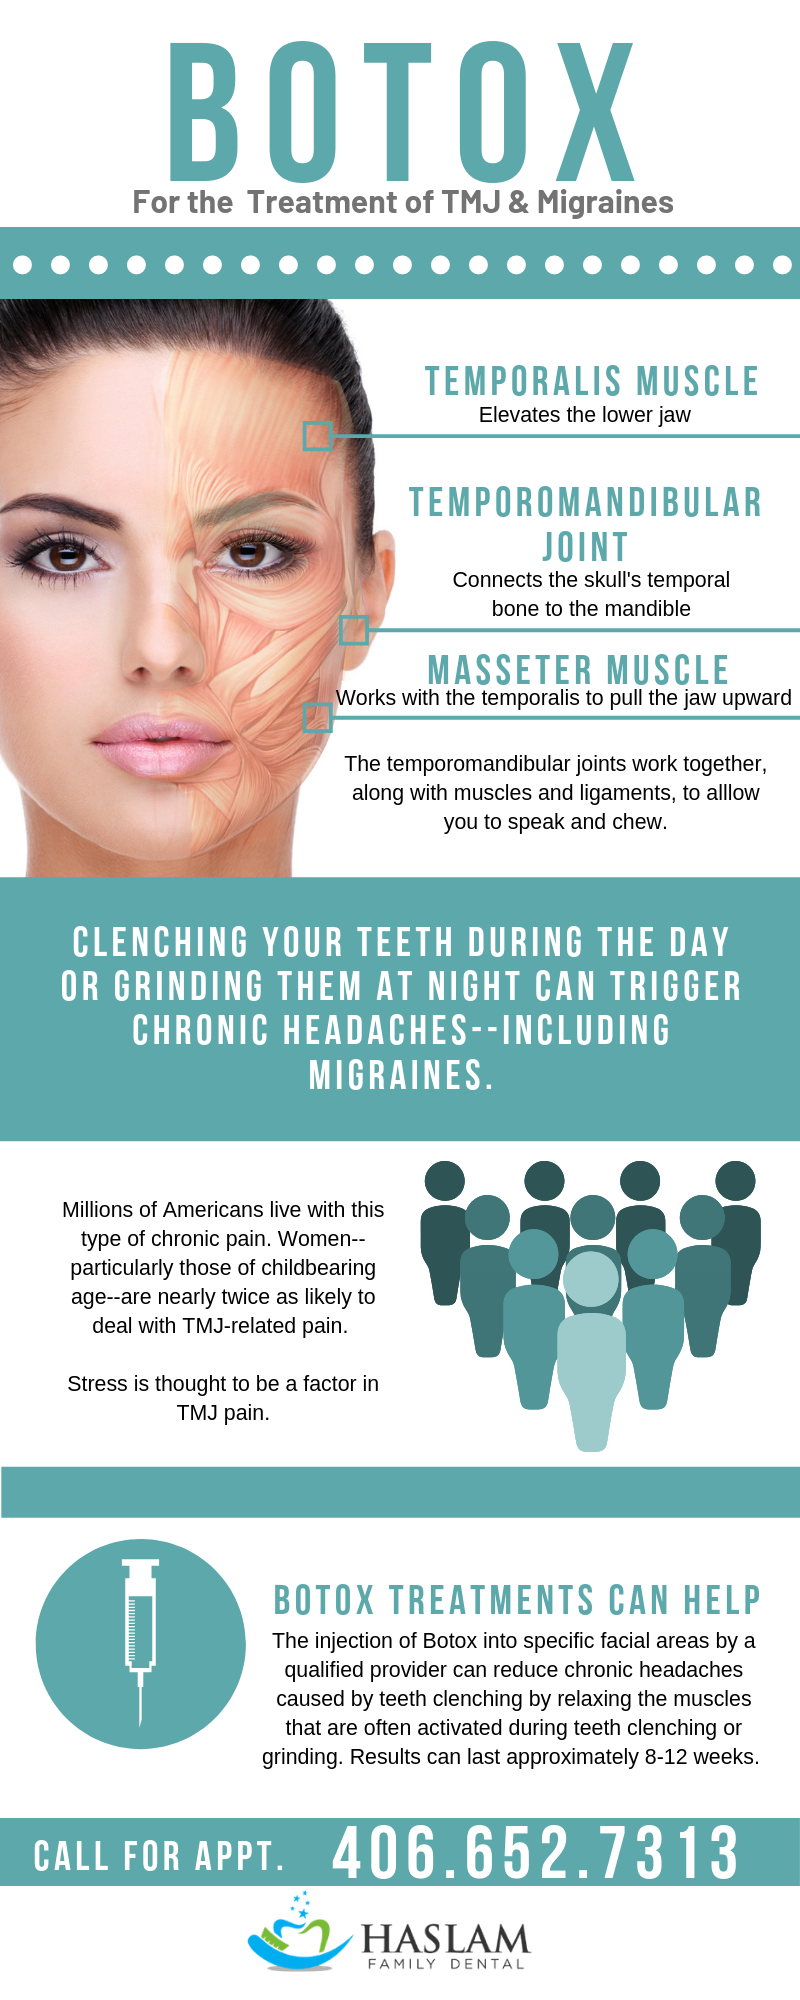 Can Botox Help With Tmj And Migraines - Haslam Dentalhaslam Dental